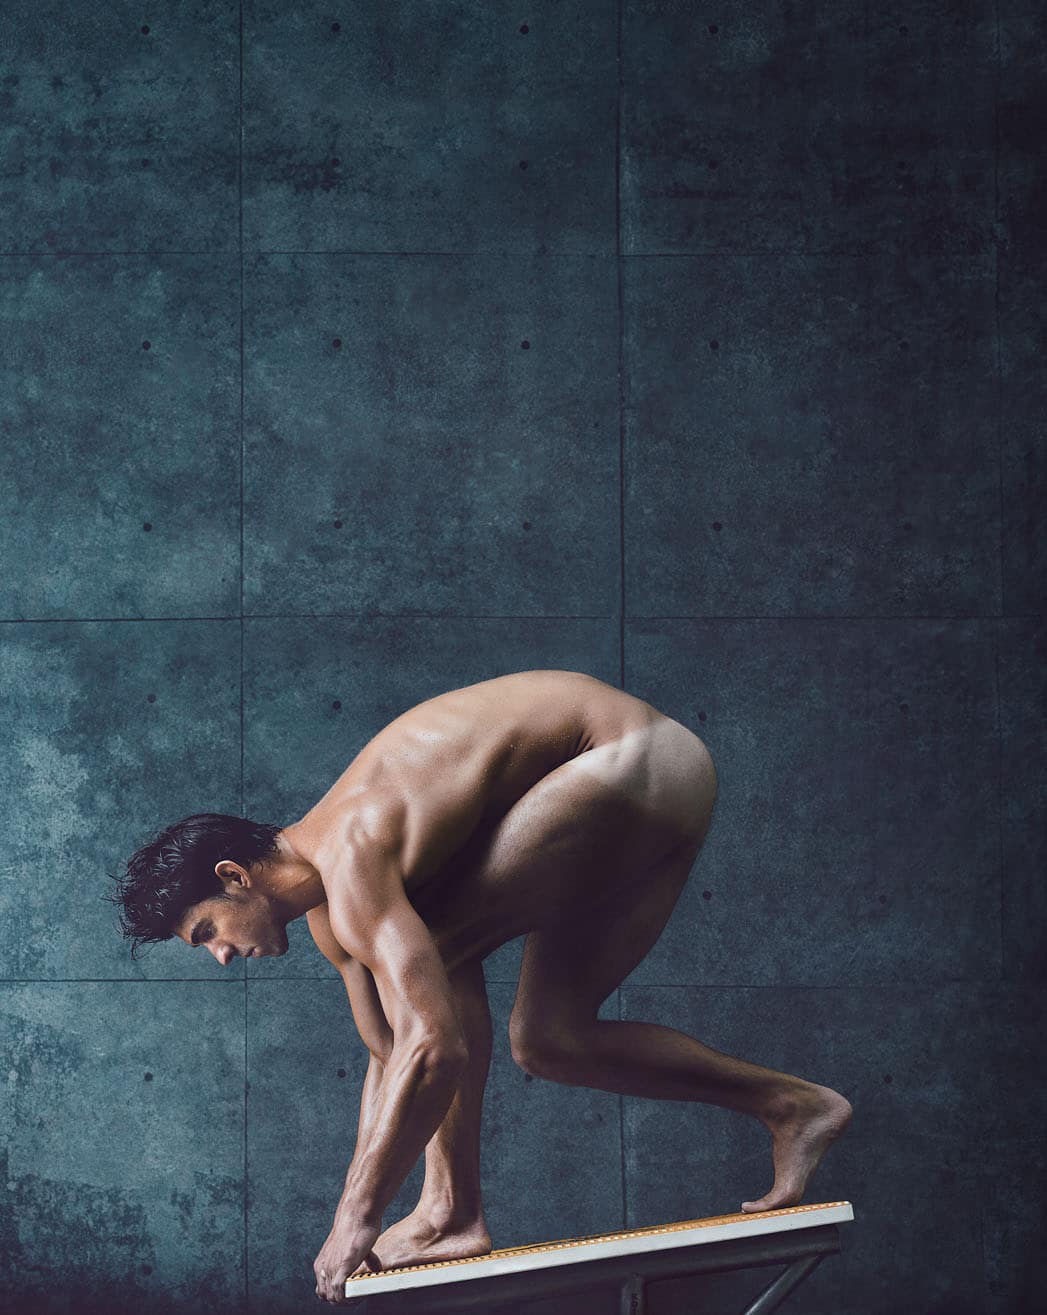 Michael Phelps naked body athlete